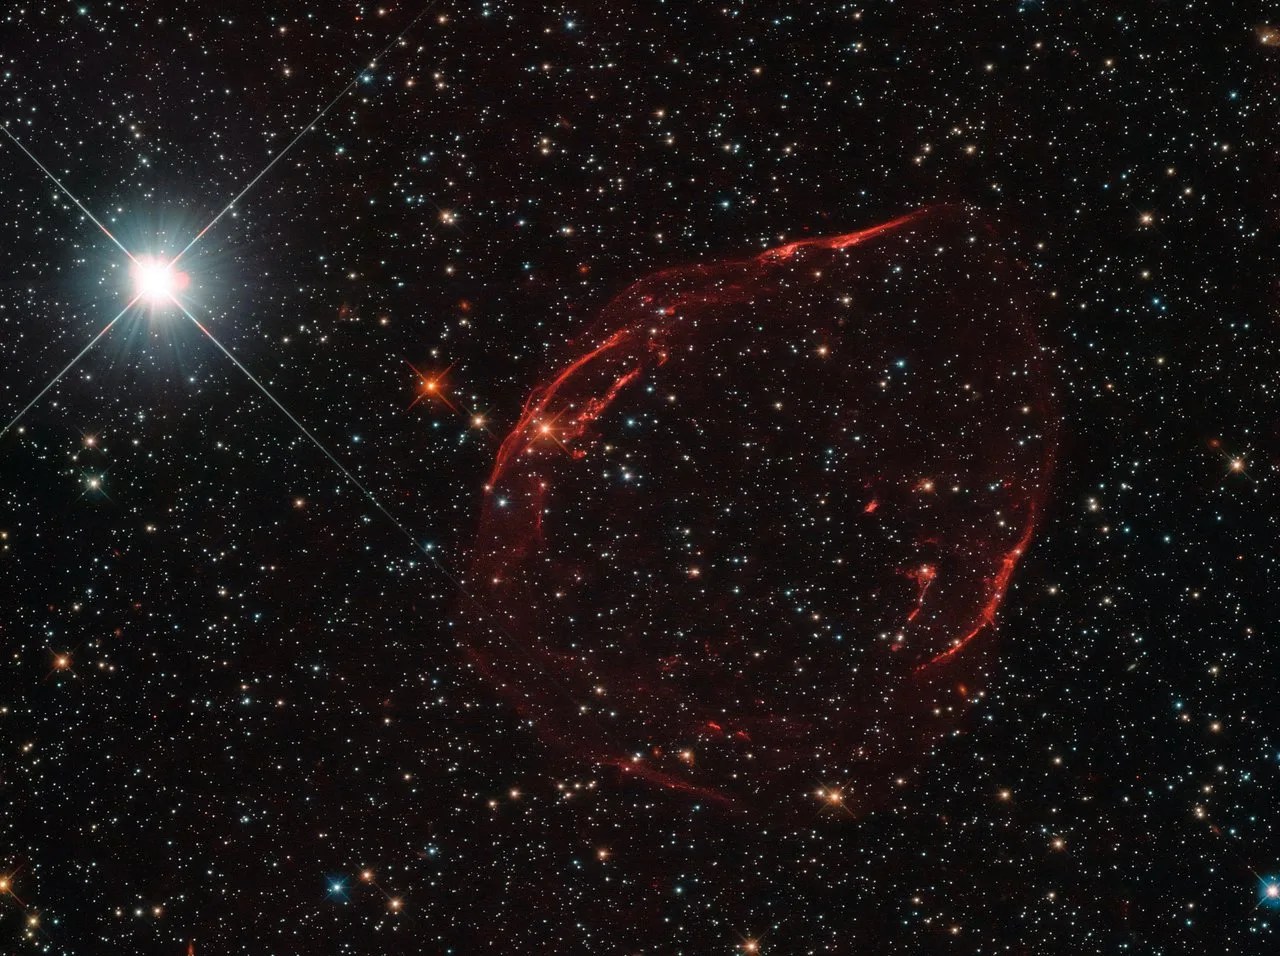 Stellar shrapnel left over from an exploding star